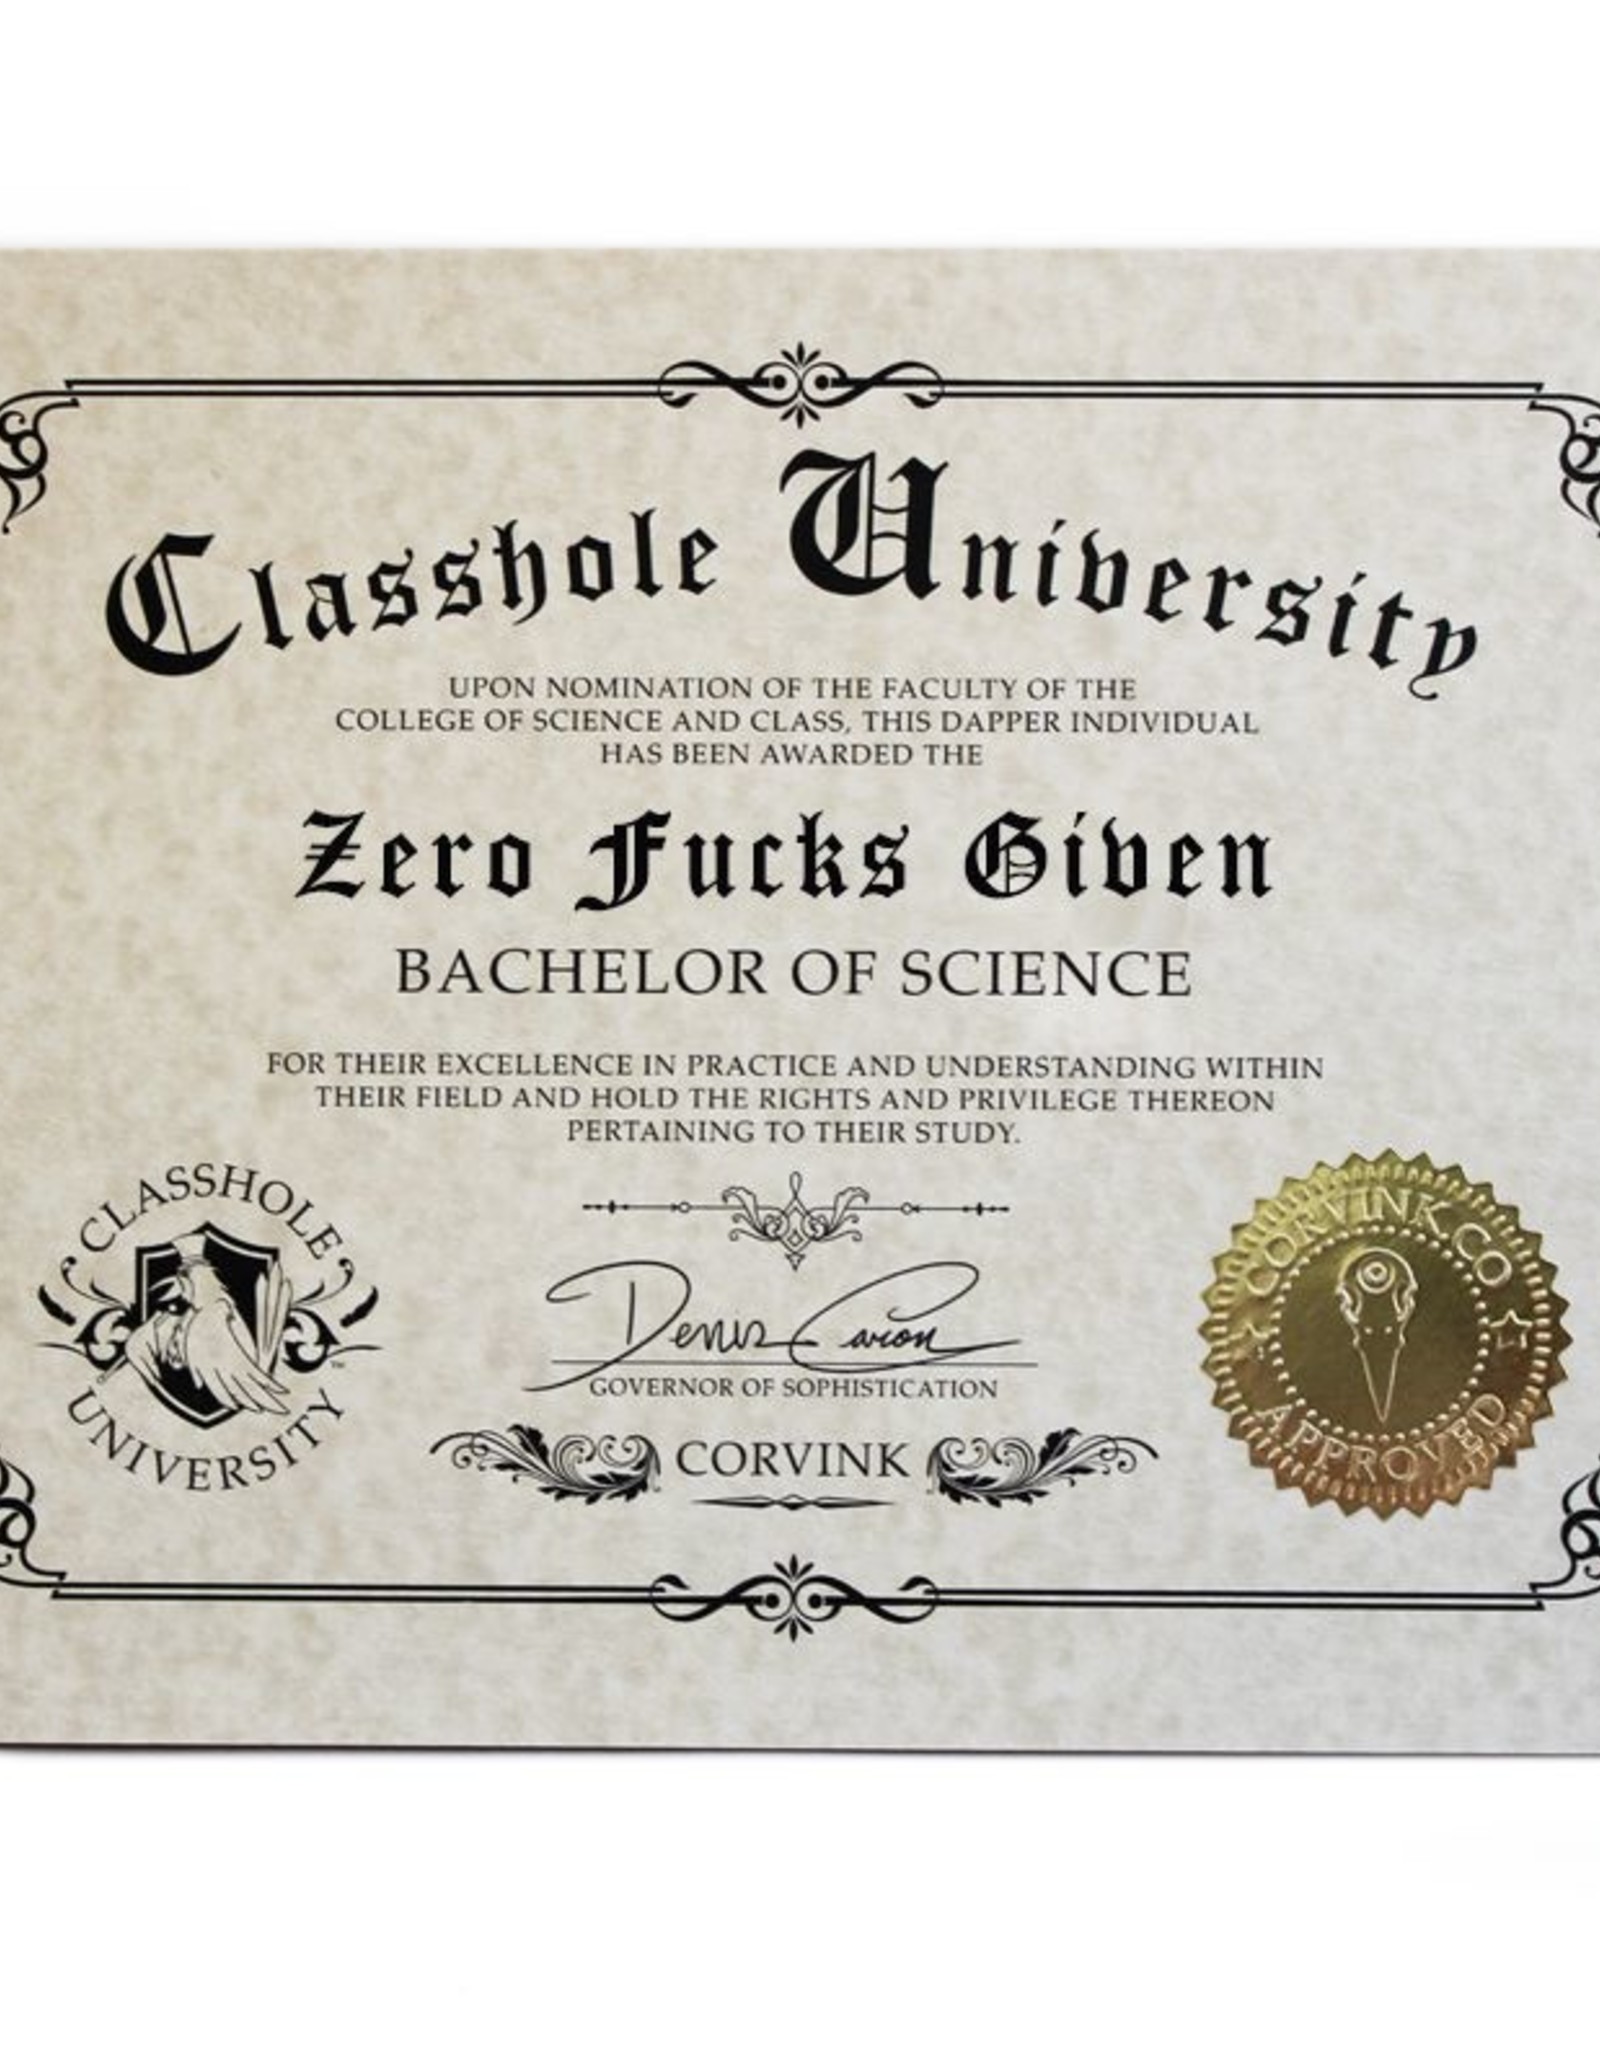 Classhole University BS Diplomas - Zero Fucks Given - SWEET! Hollywood